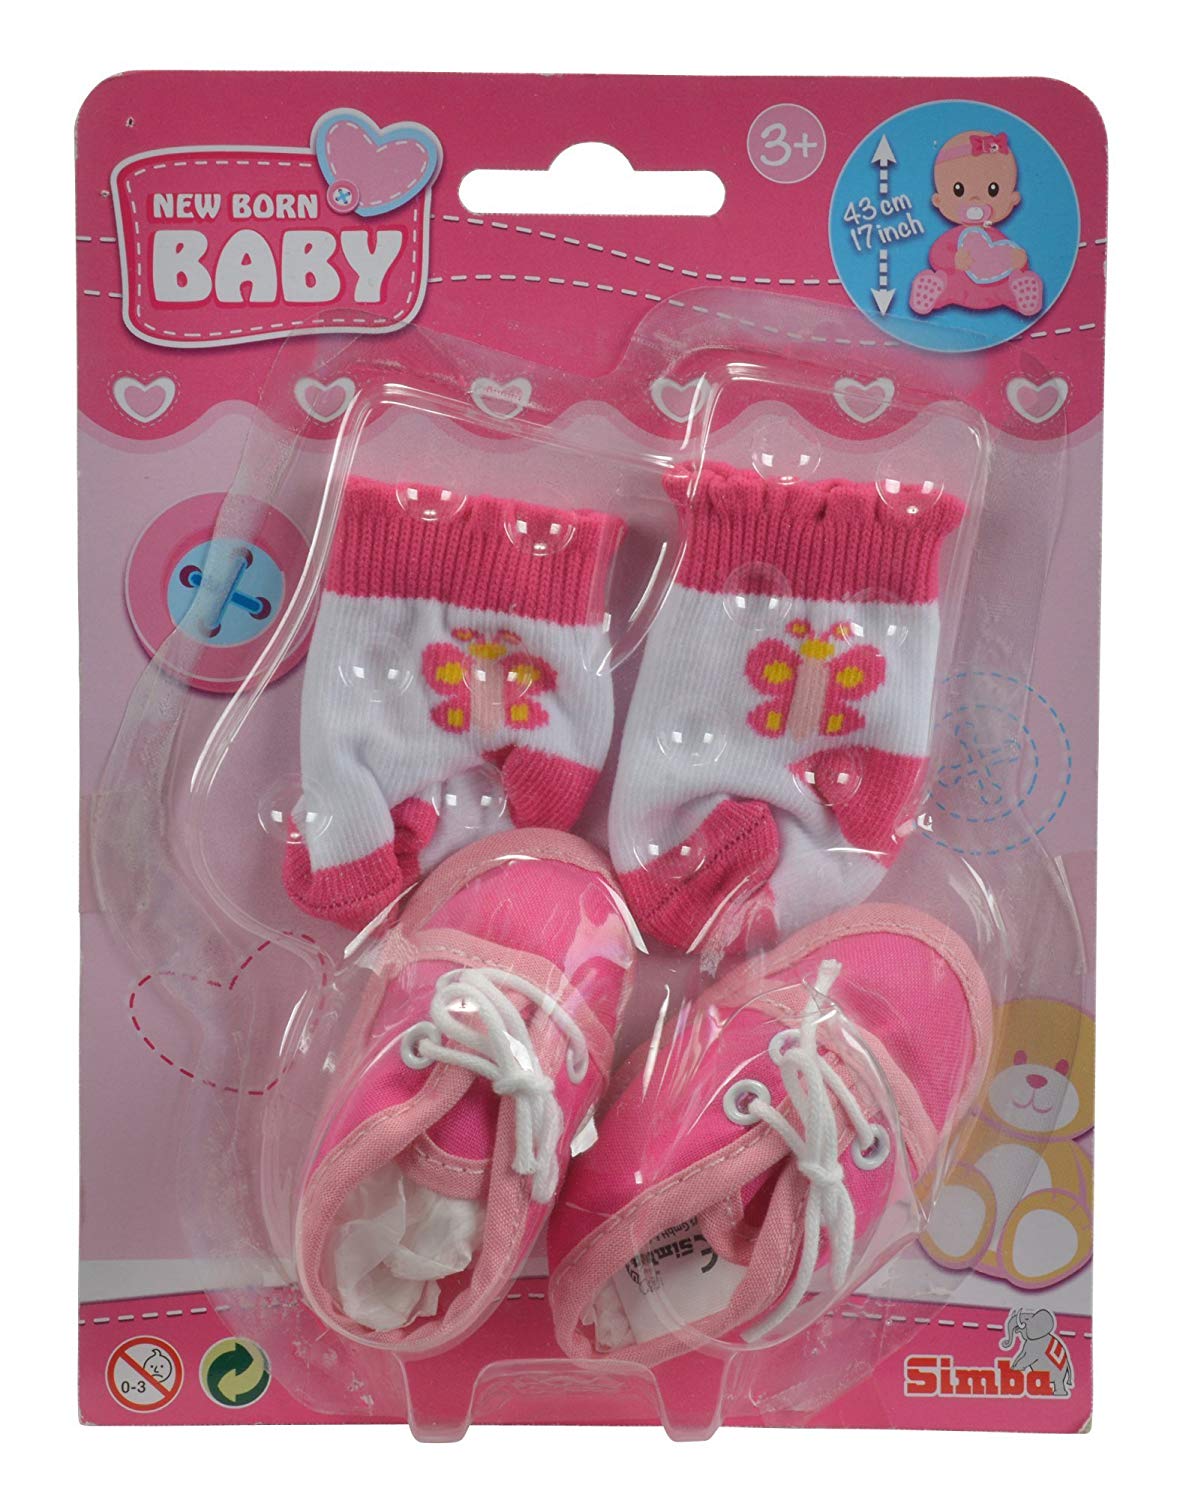 Simba New Born Baby Shoes And Socks 105560844, Sort.